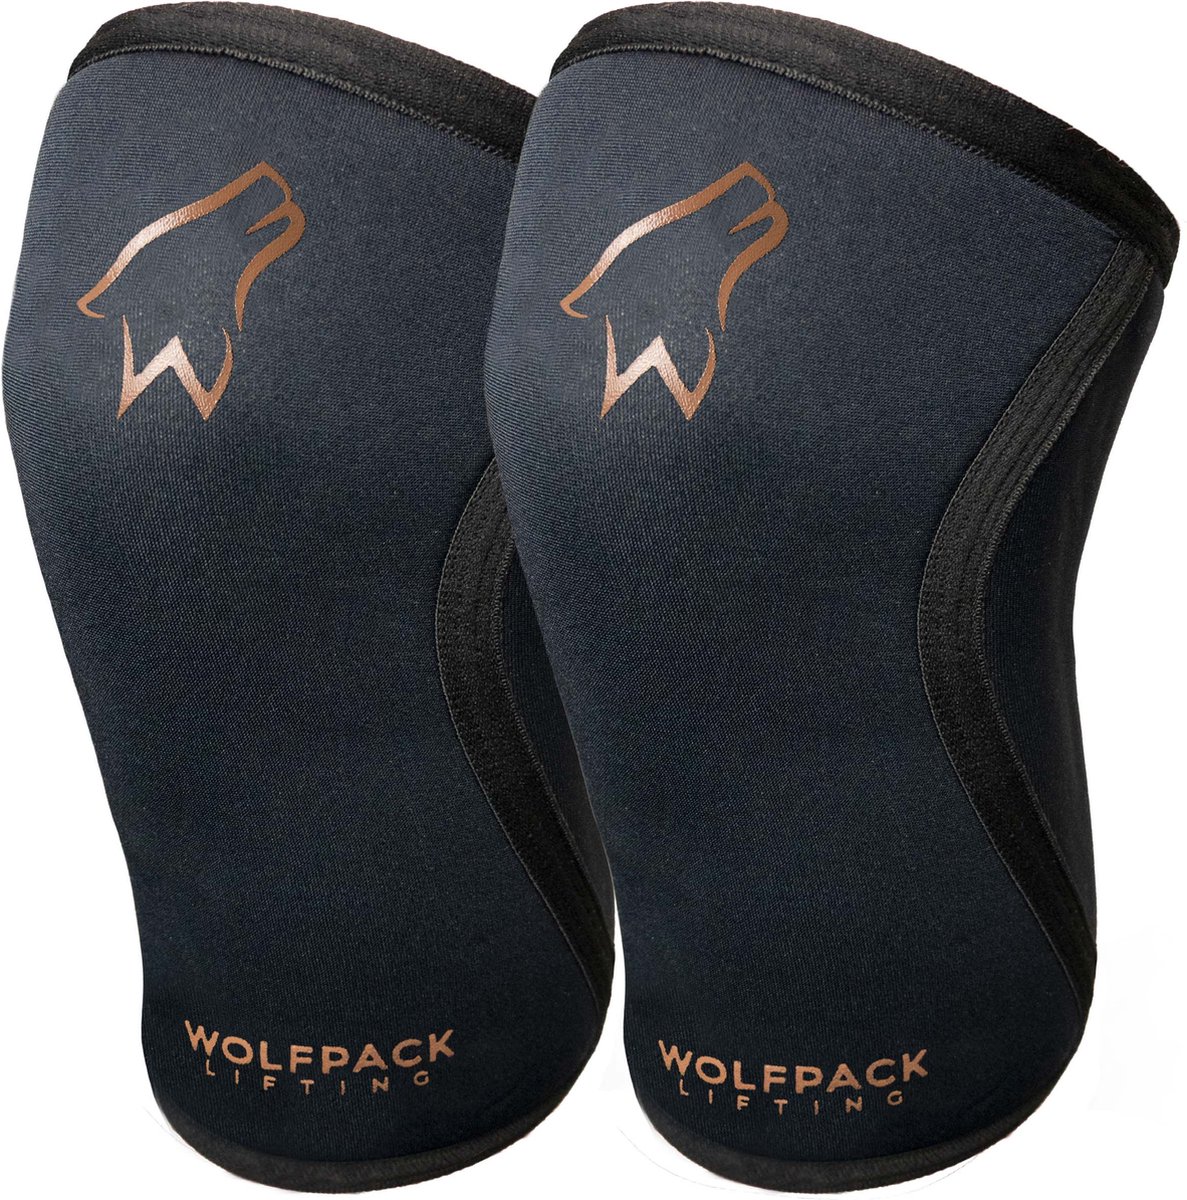 Wolfpack Lifting - Knee Sleeves - Knie Brace - Fitness - Krachttraining - Squatten - Maat XL - Zwart/Bruin - 2 stuks